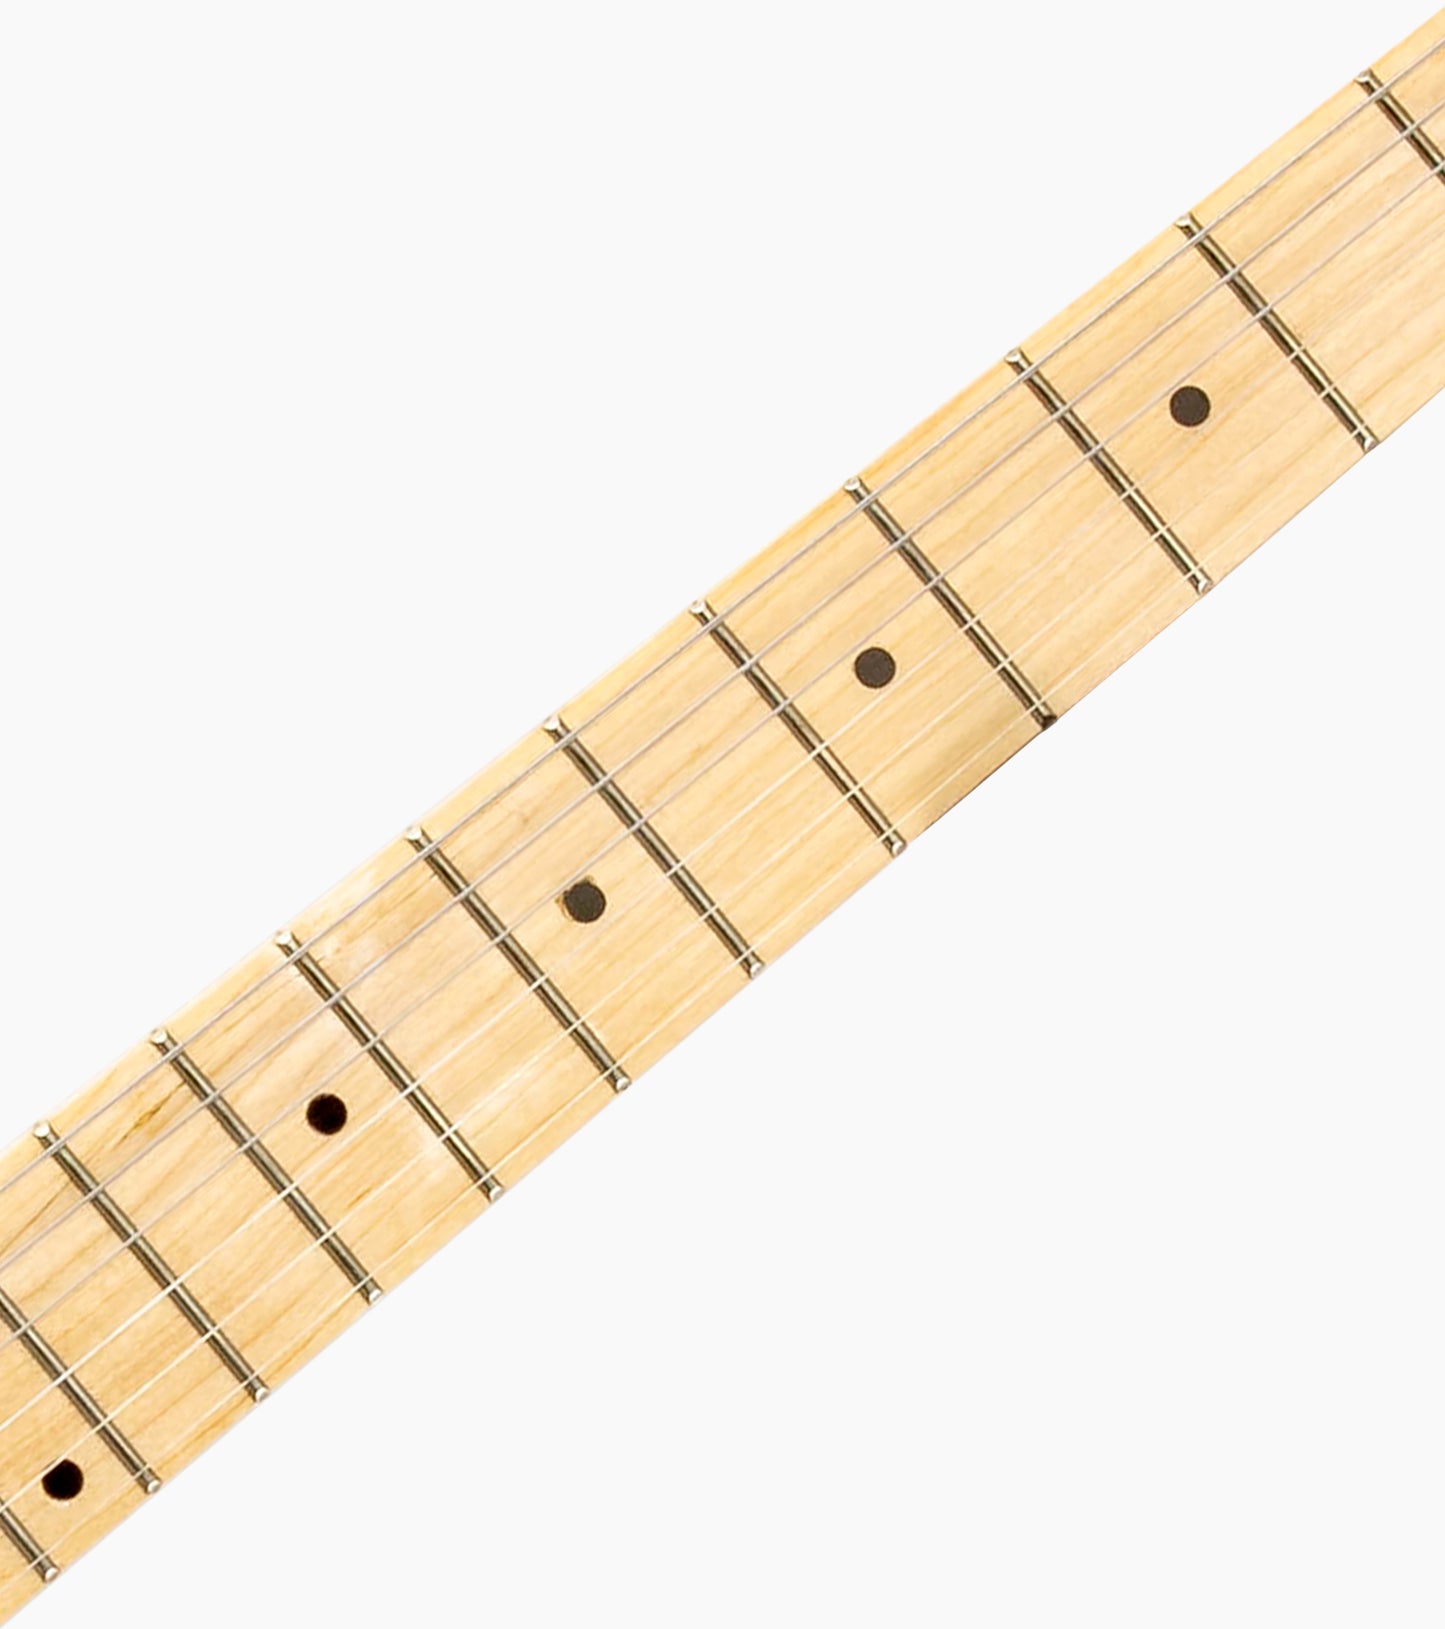 close-up of Mahogany single-cutaway electric guitar fretboard